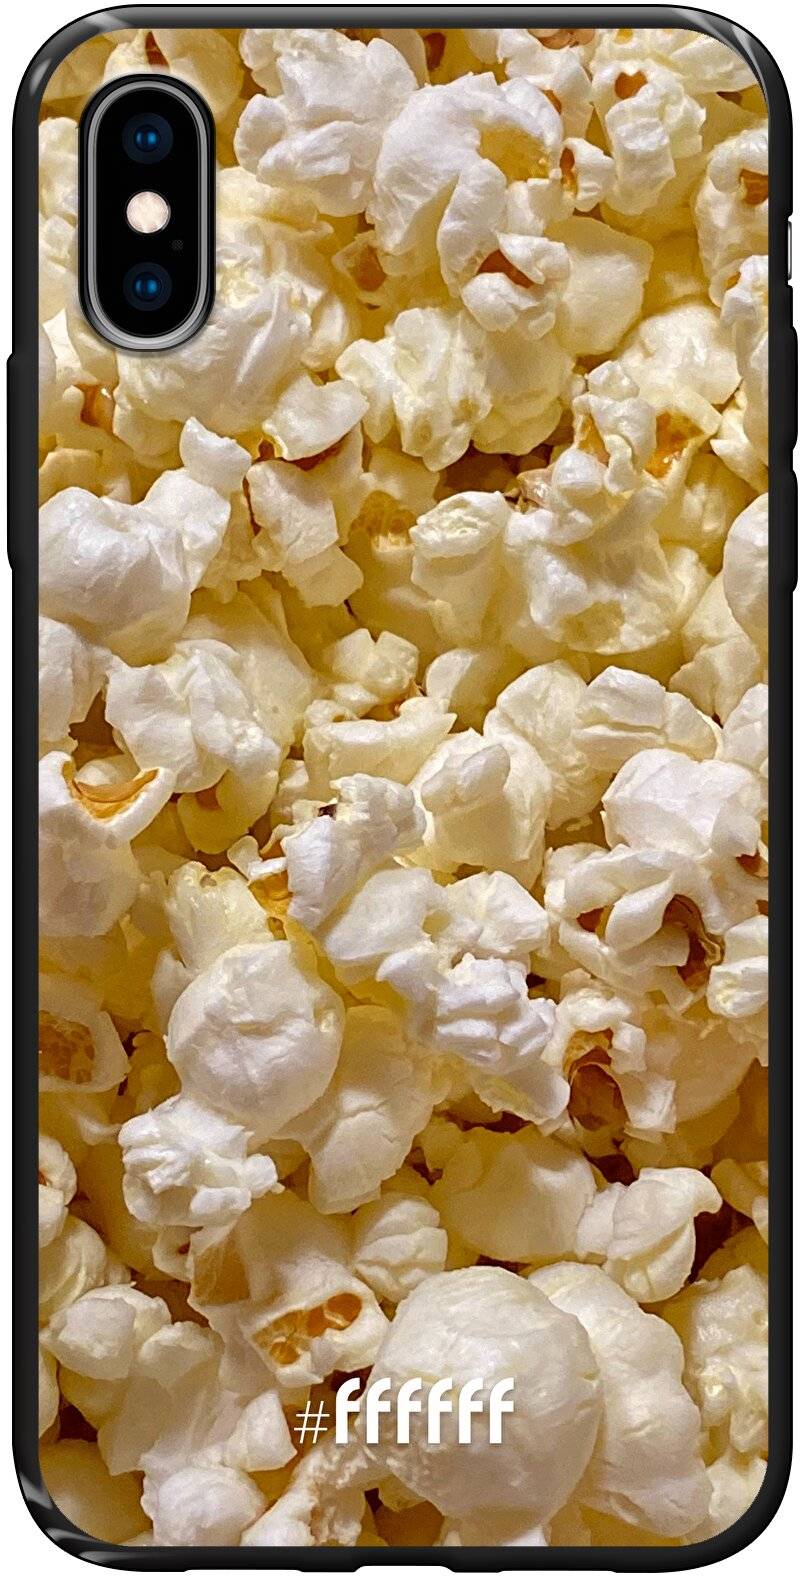 Popcorn iPhone X